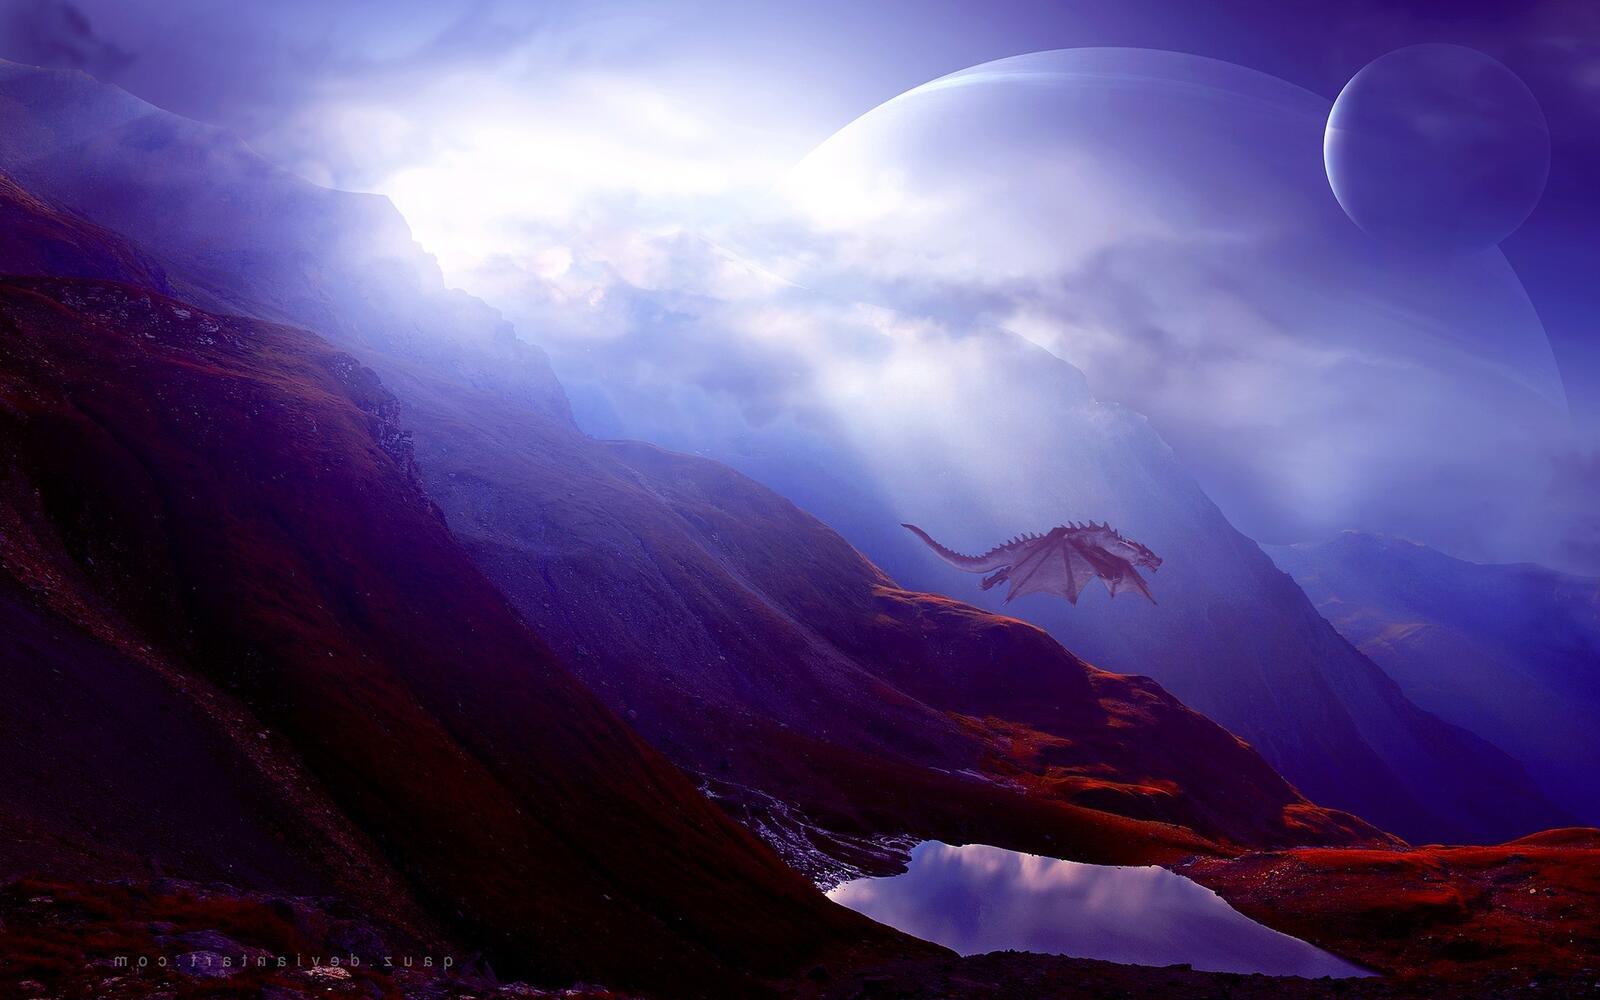 Бесплатное фото Дракон на фоне планет